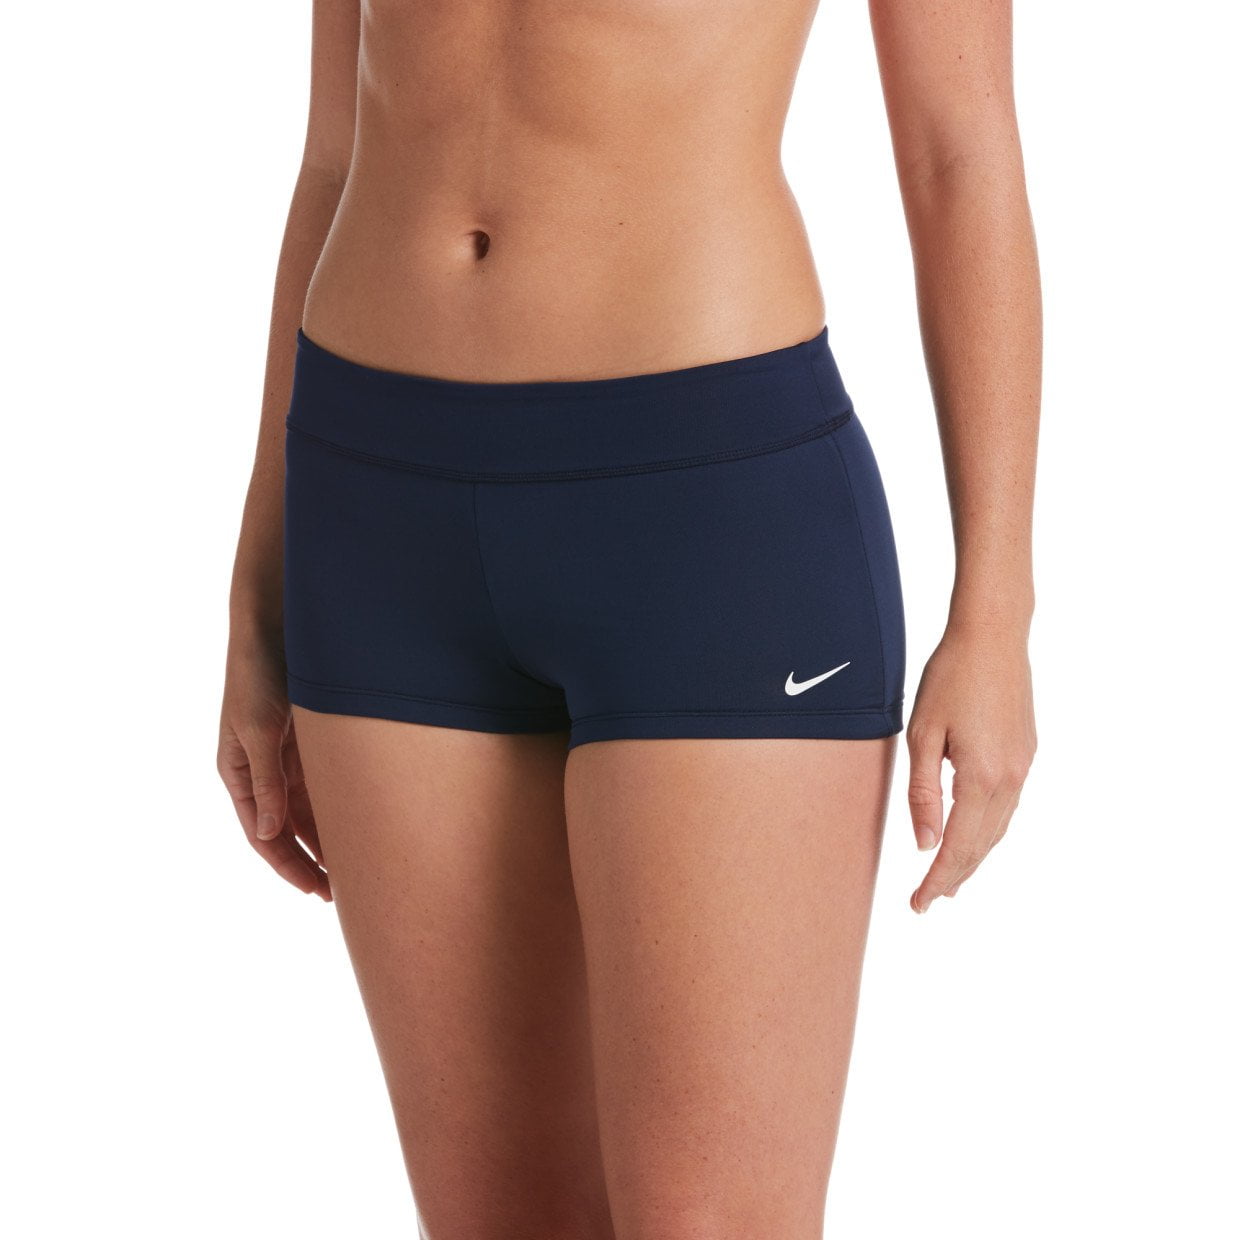 Nike Swim Women's Kick Short Shorts Navy Blue Small / Navy -